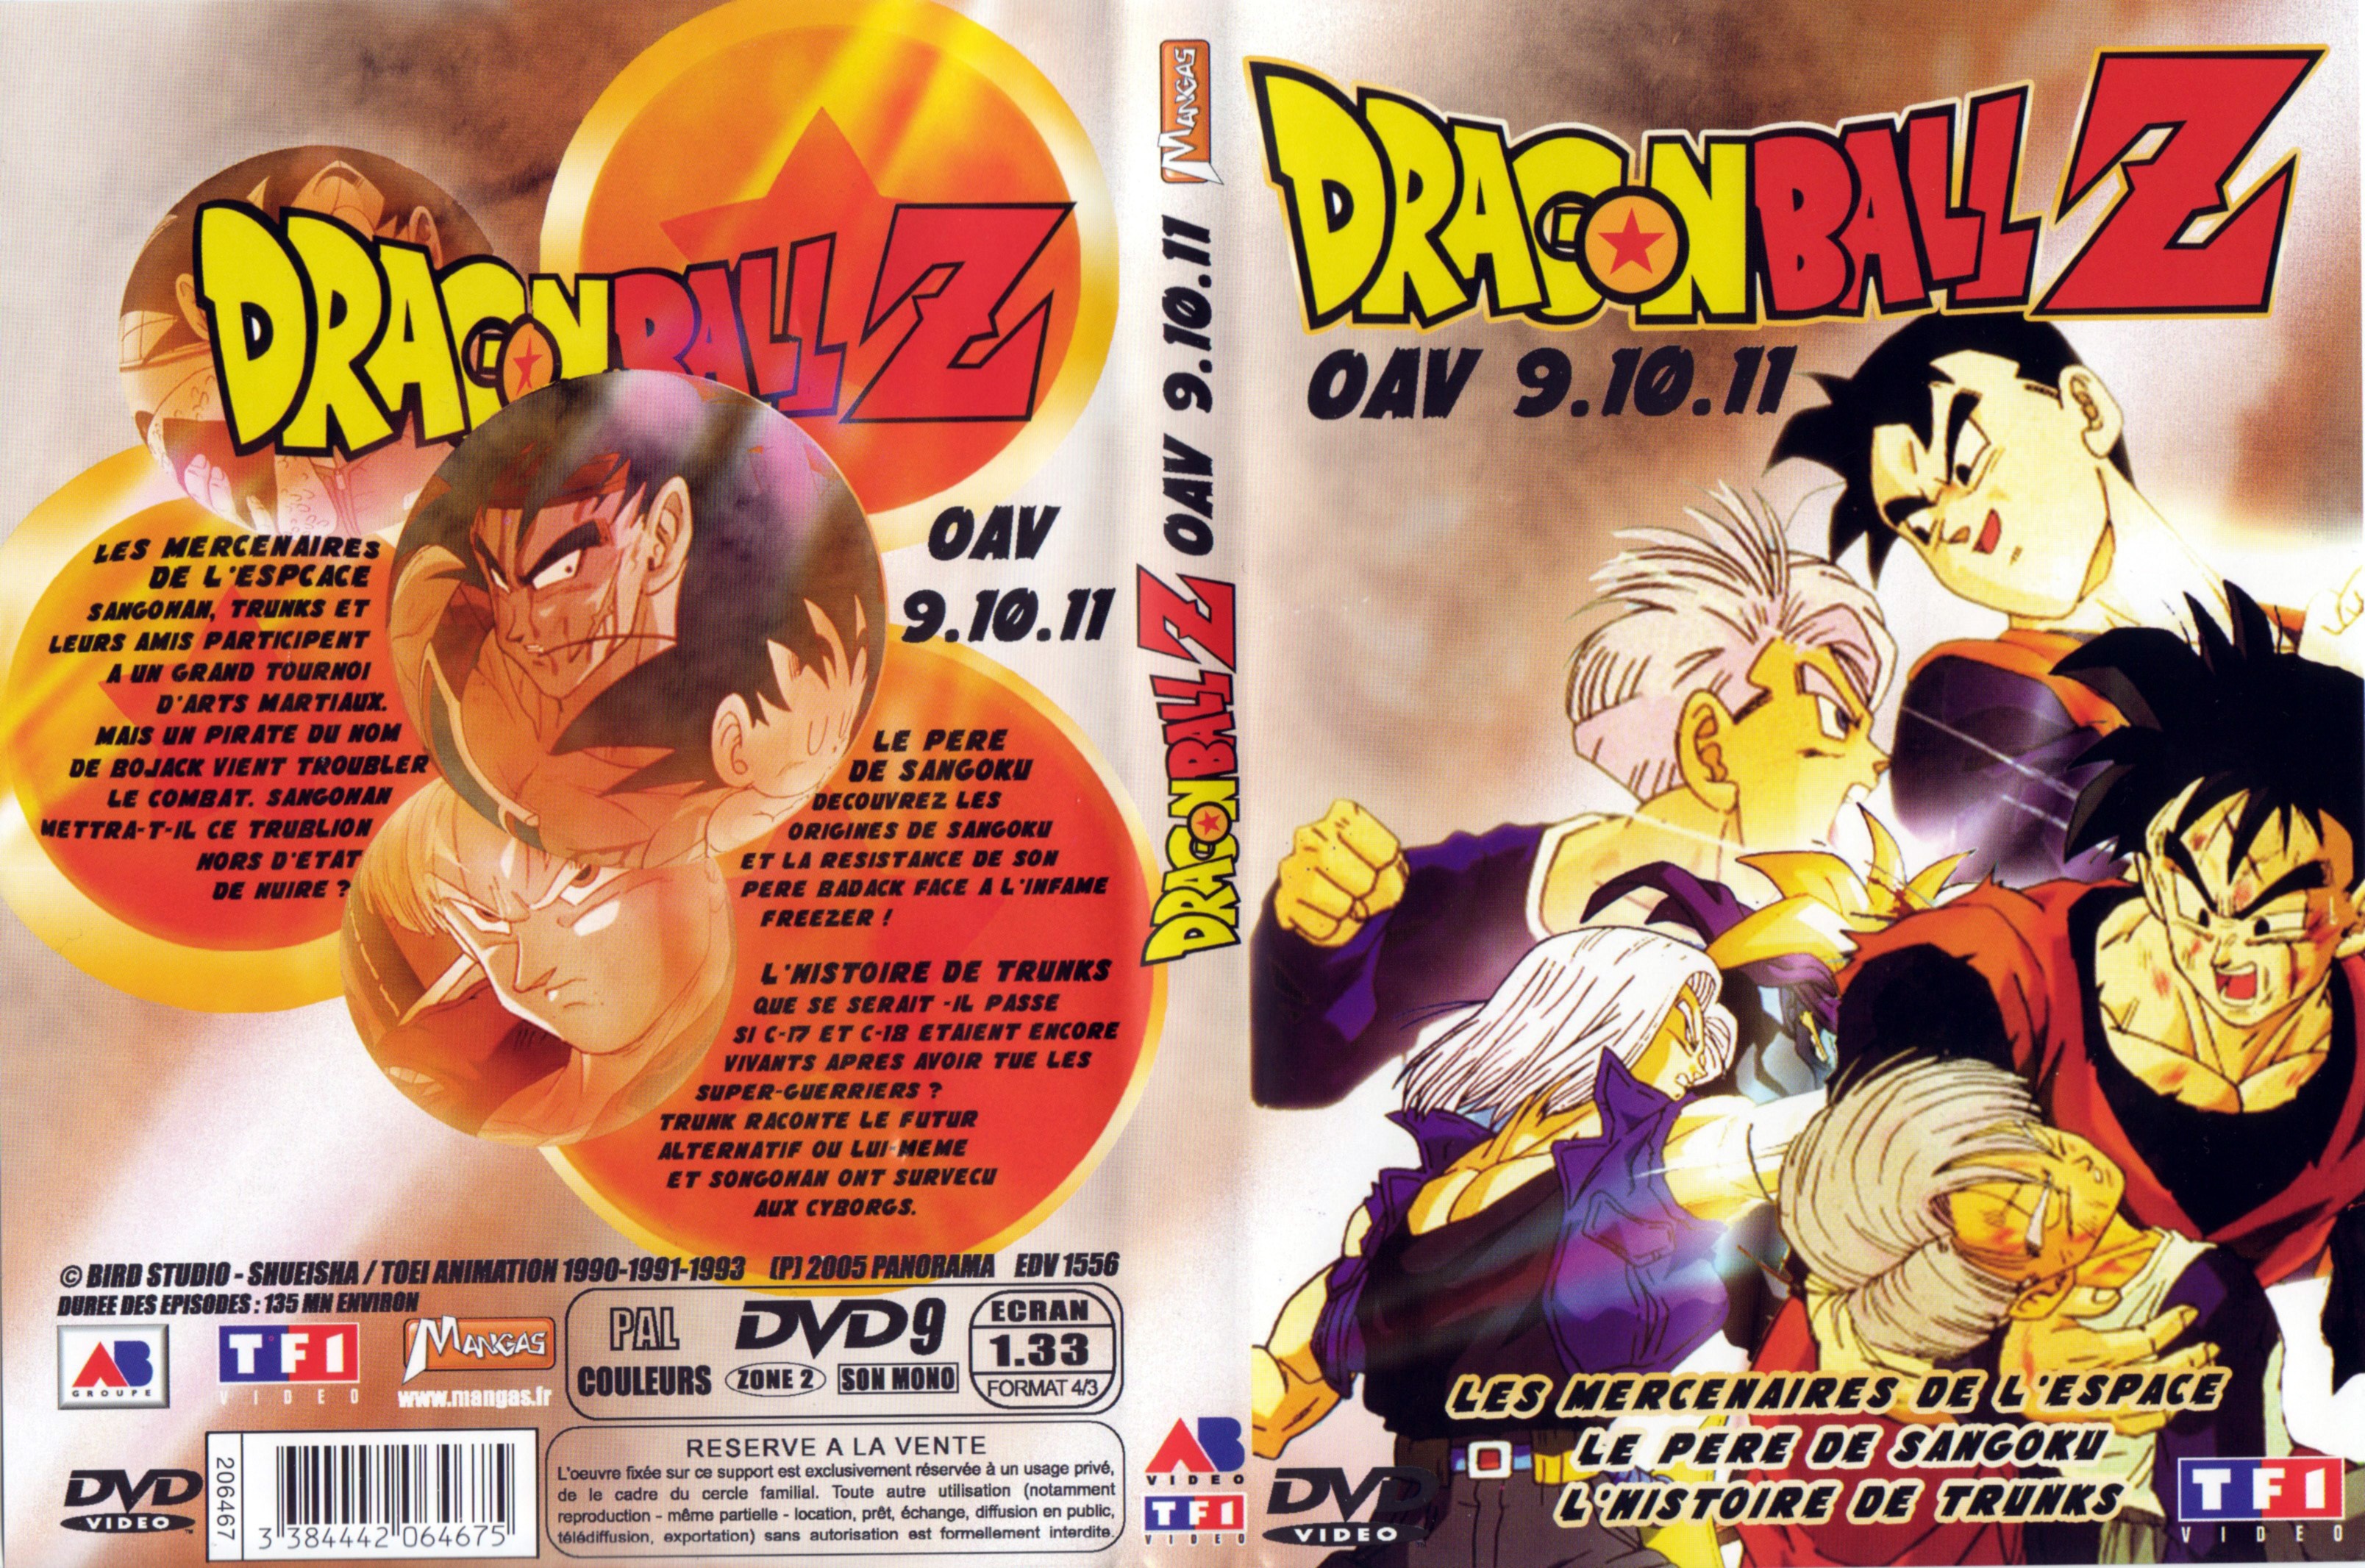 Jaquette DVD Dragon ball Z OAV 9-10-11